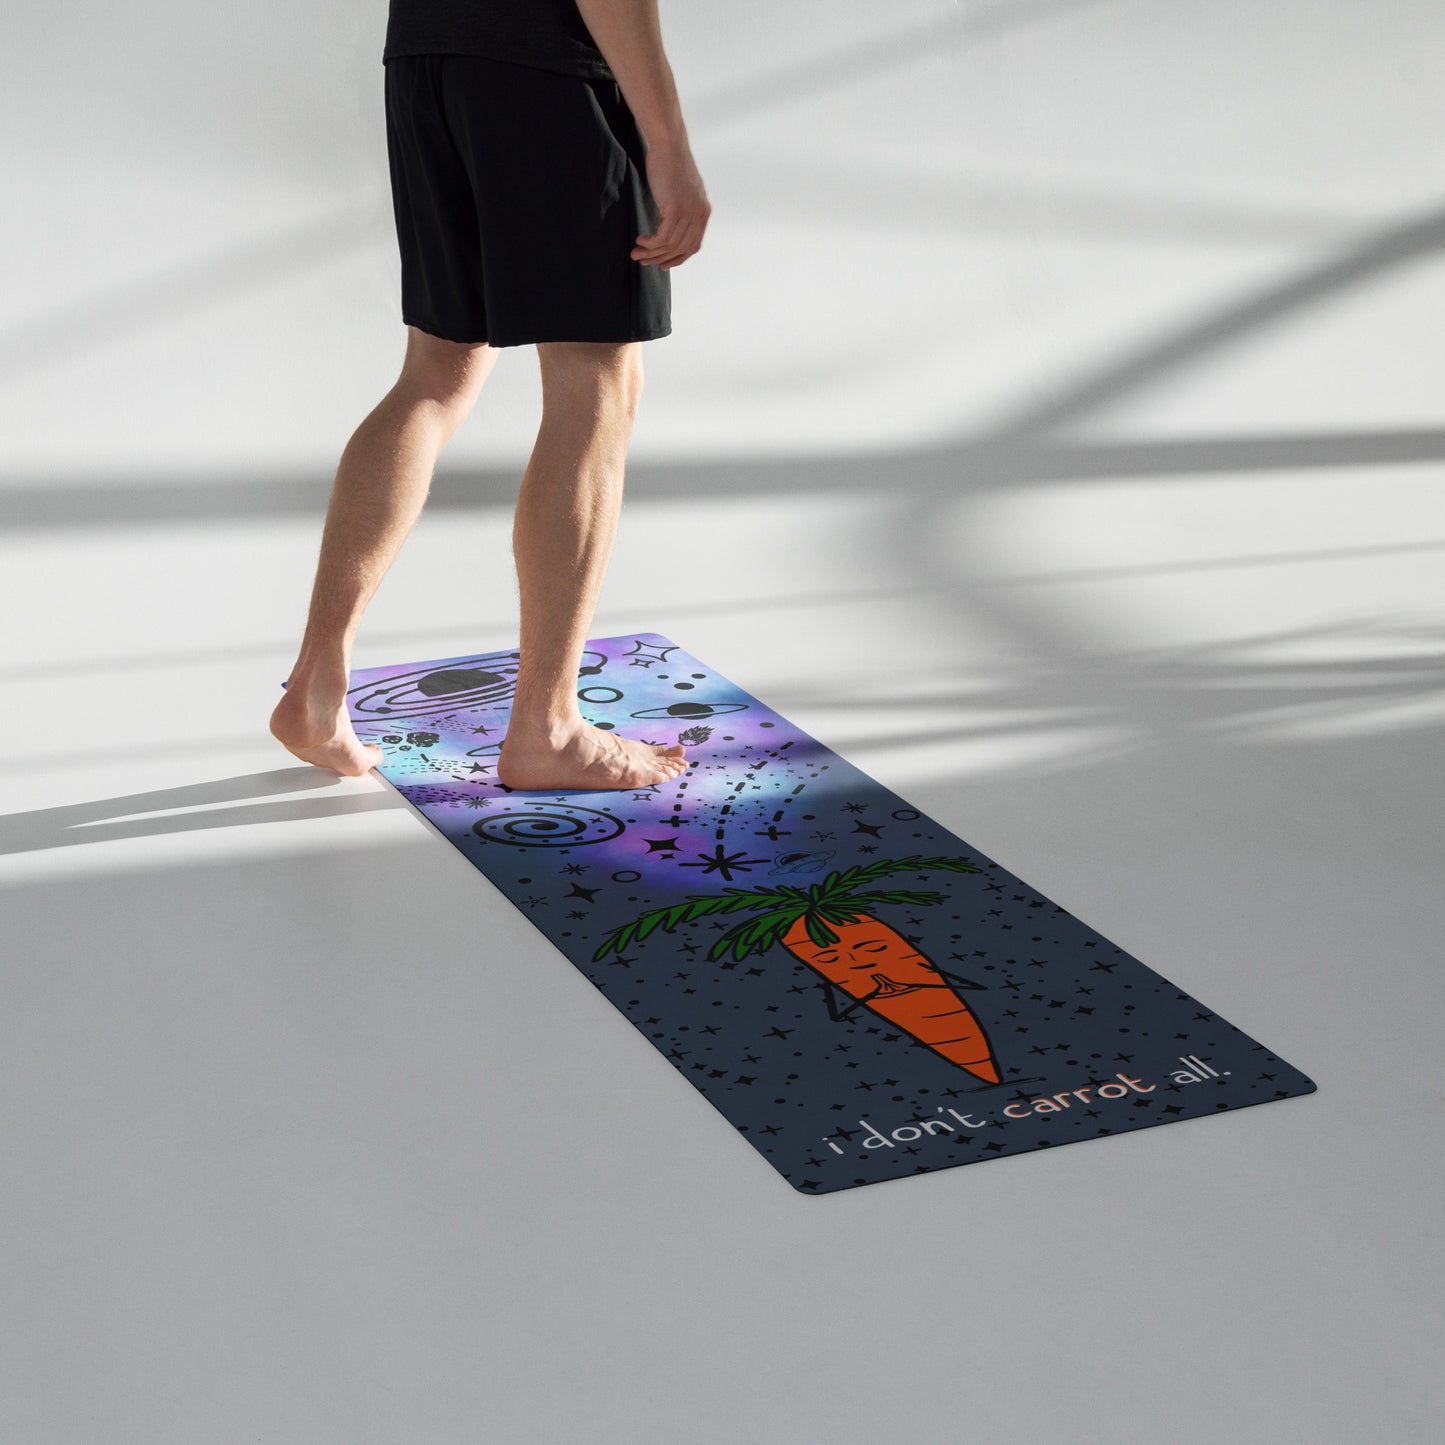 Carrot manifest destiny Yoga mat